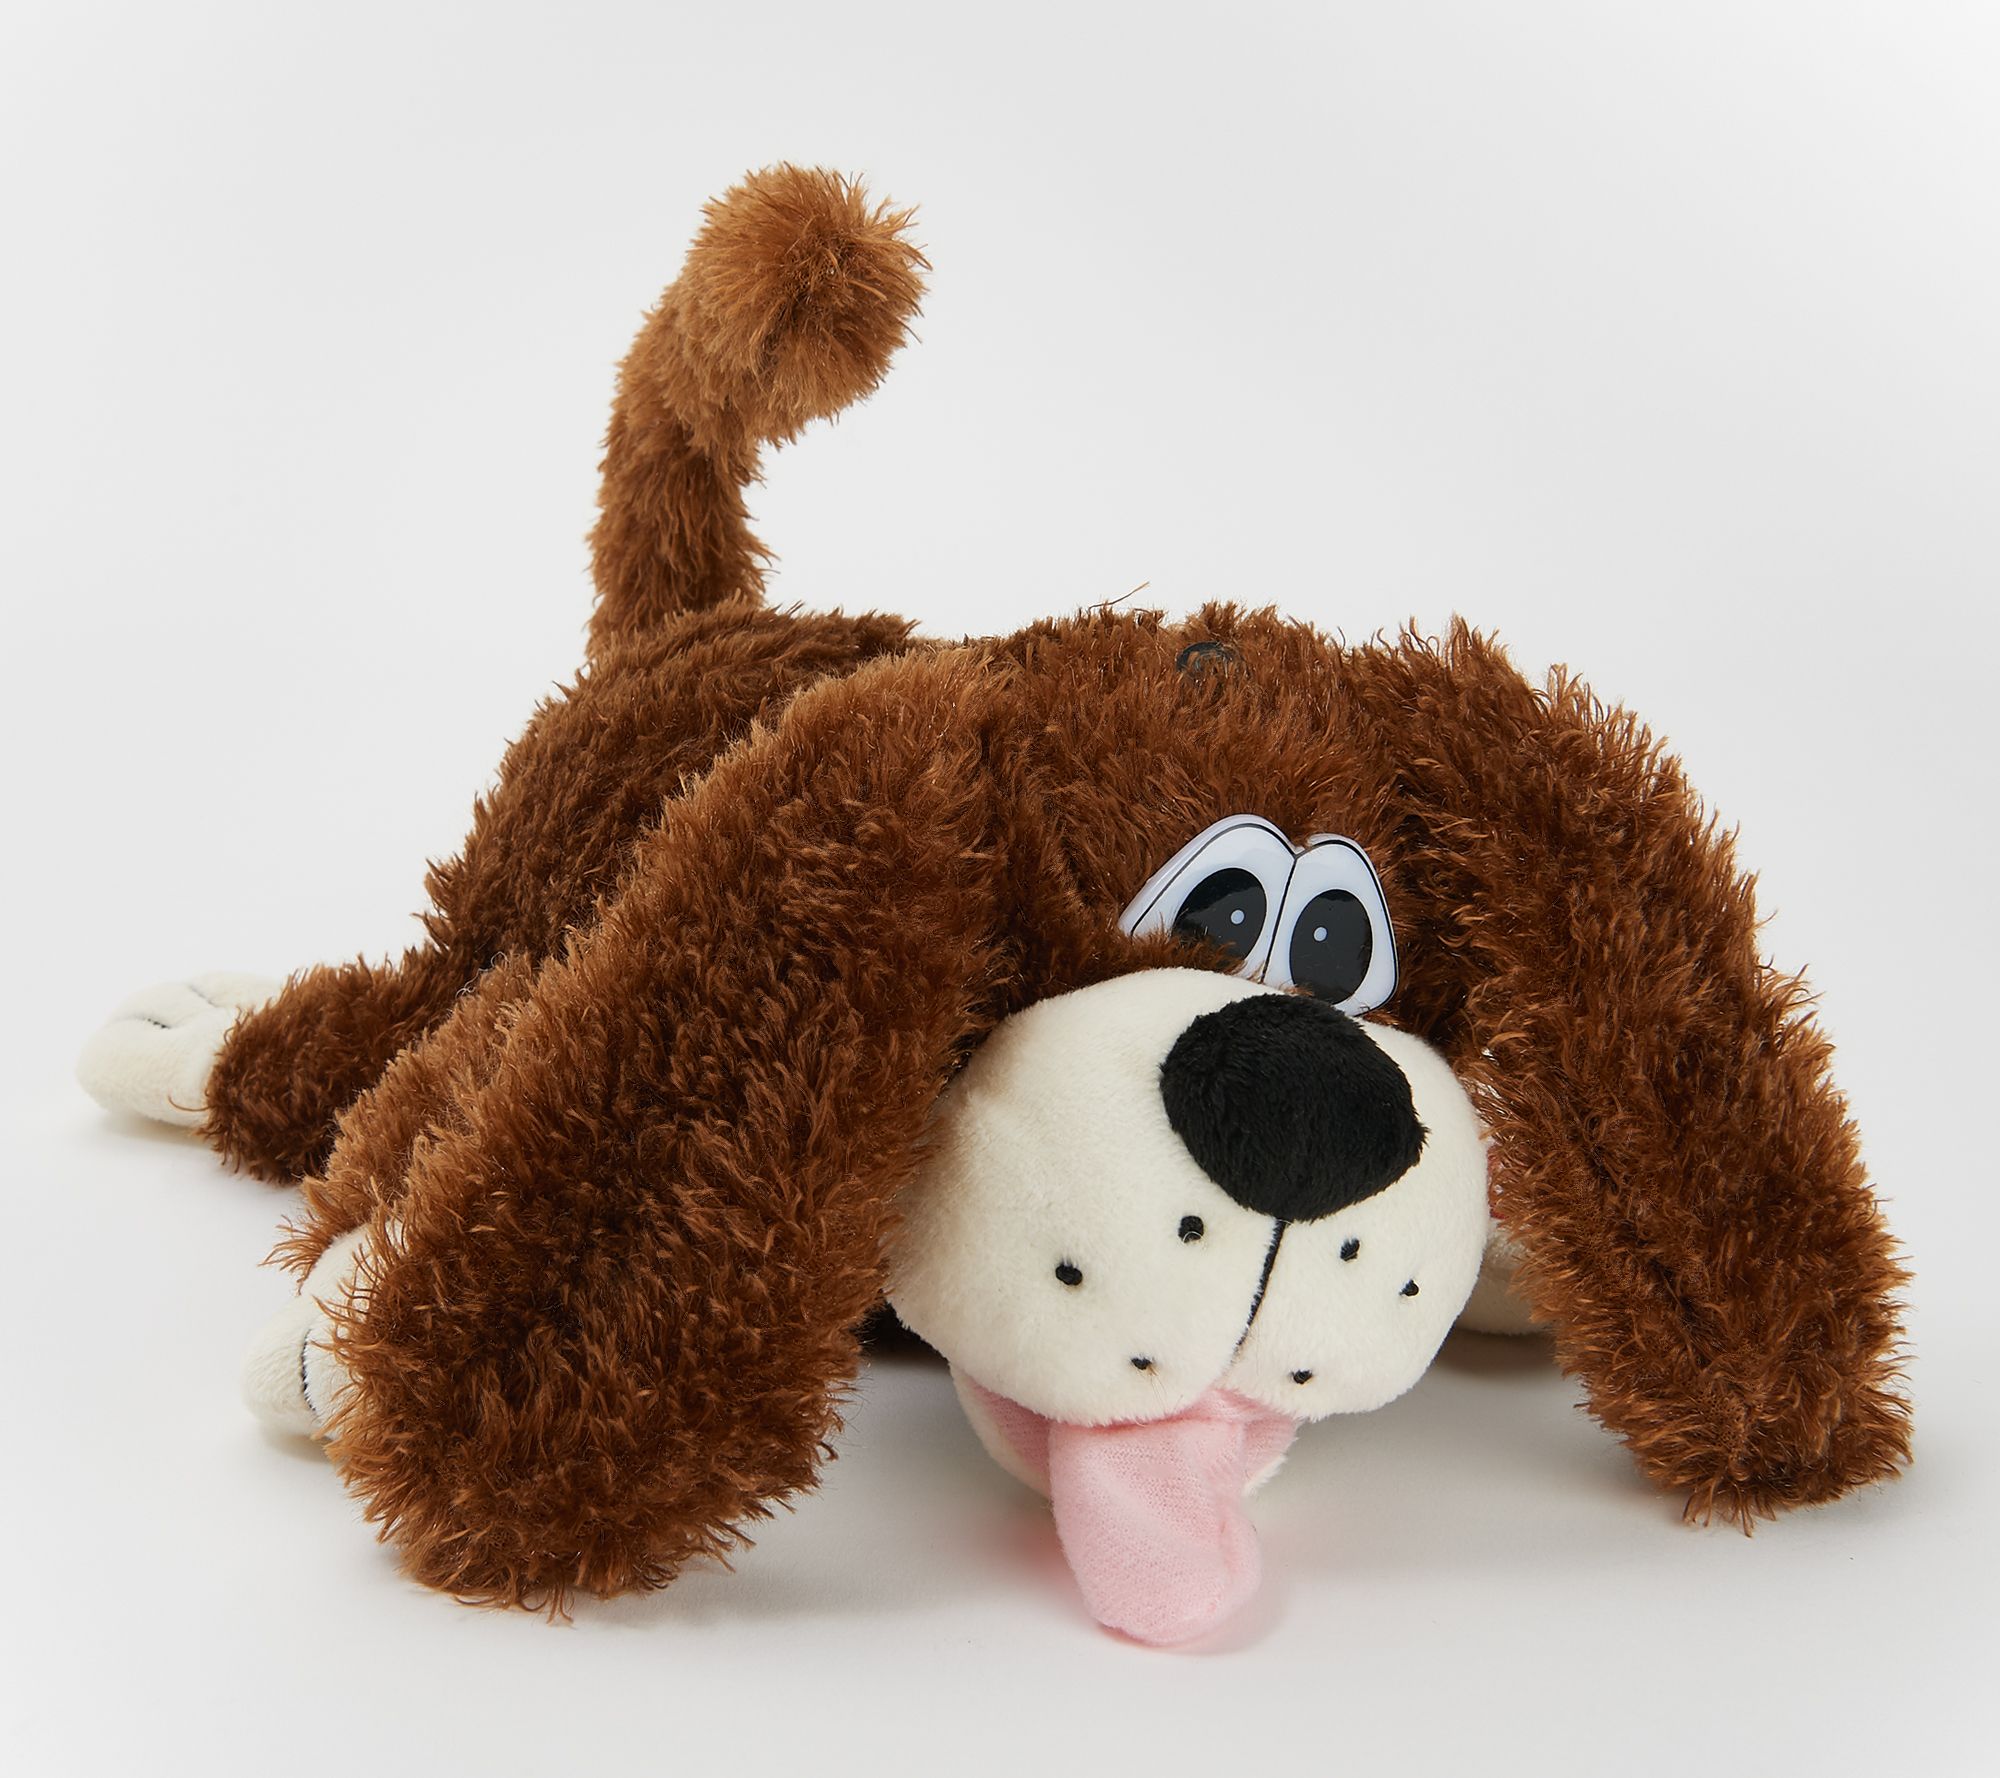 animated stuffed dog